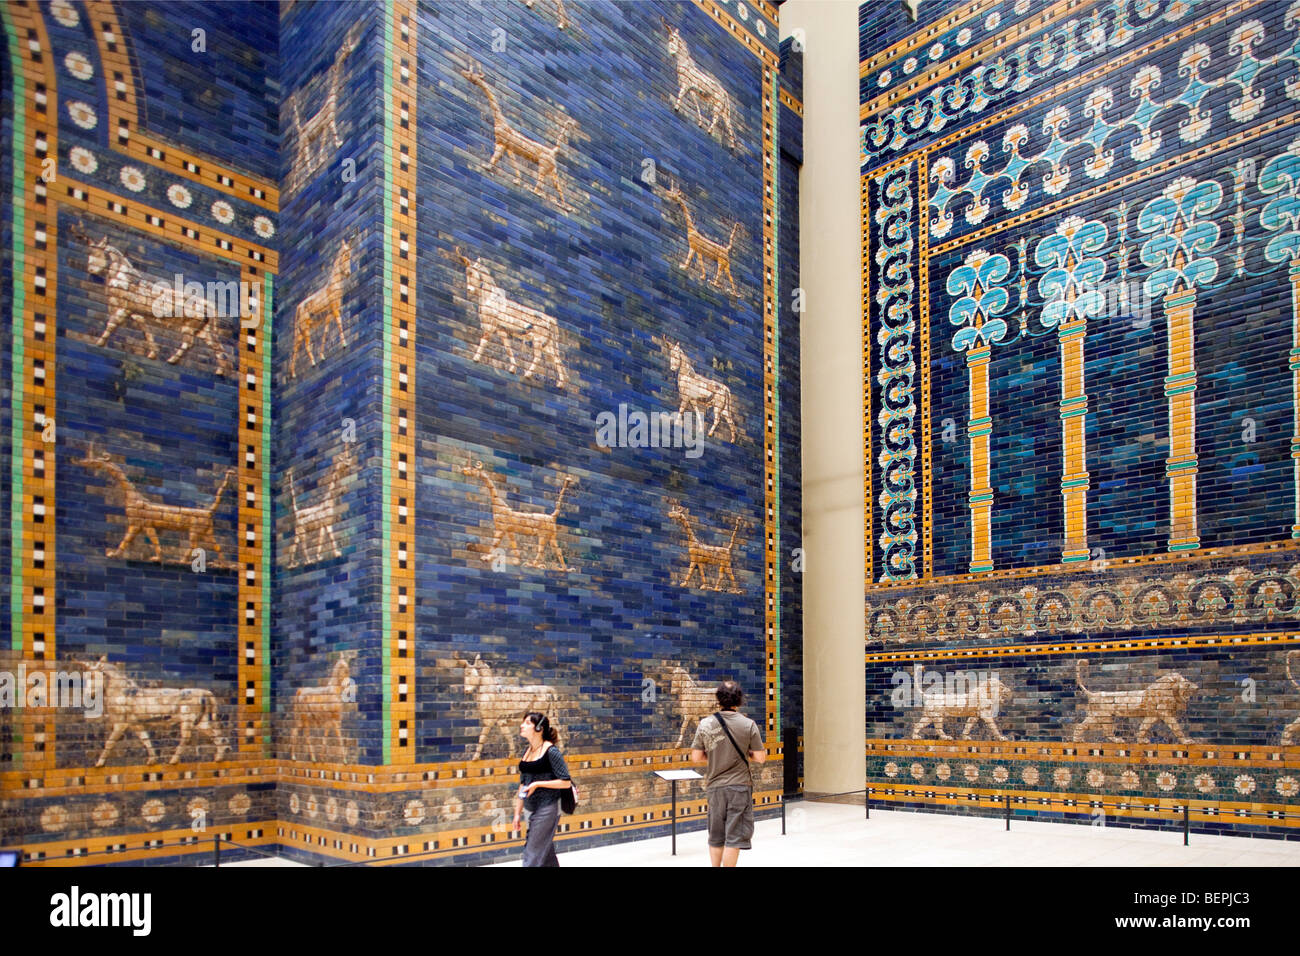 Ishtar Gate of the ancient city of Babylon, Pergamon Museum, Berlin, Germany Stock Photo